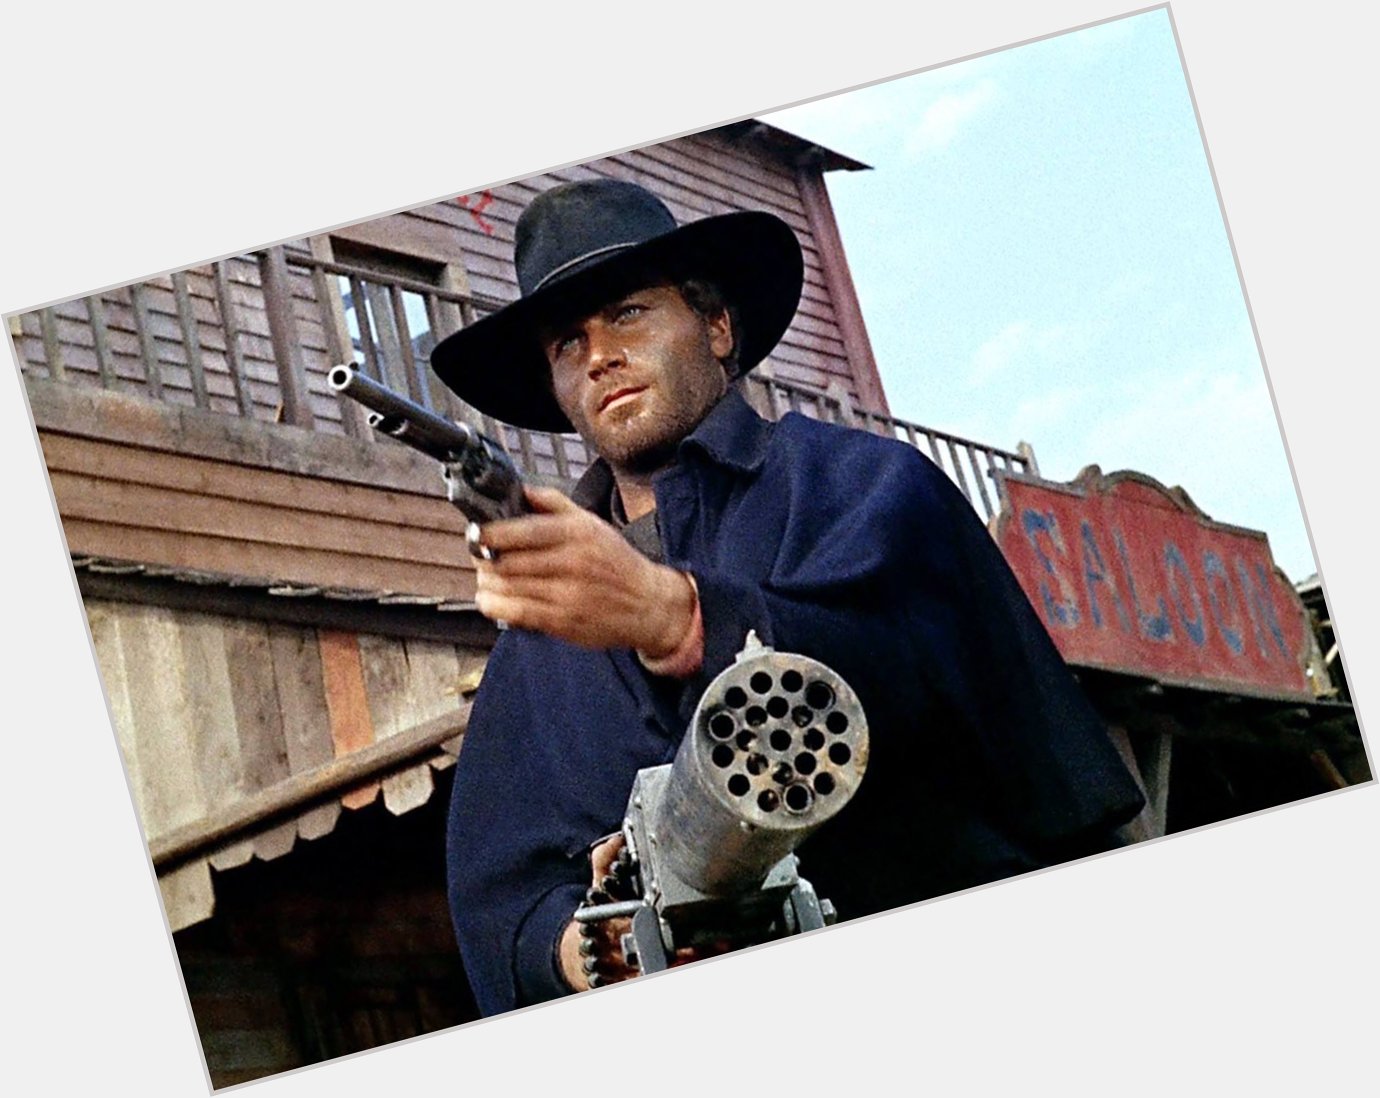 Happy 78th birthday Franco Nero!
DJANGO (1966)
Classic western! 